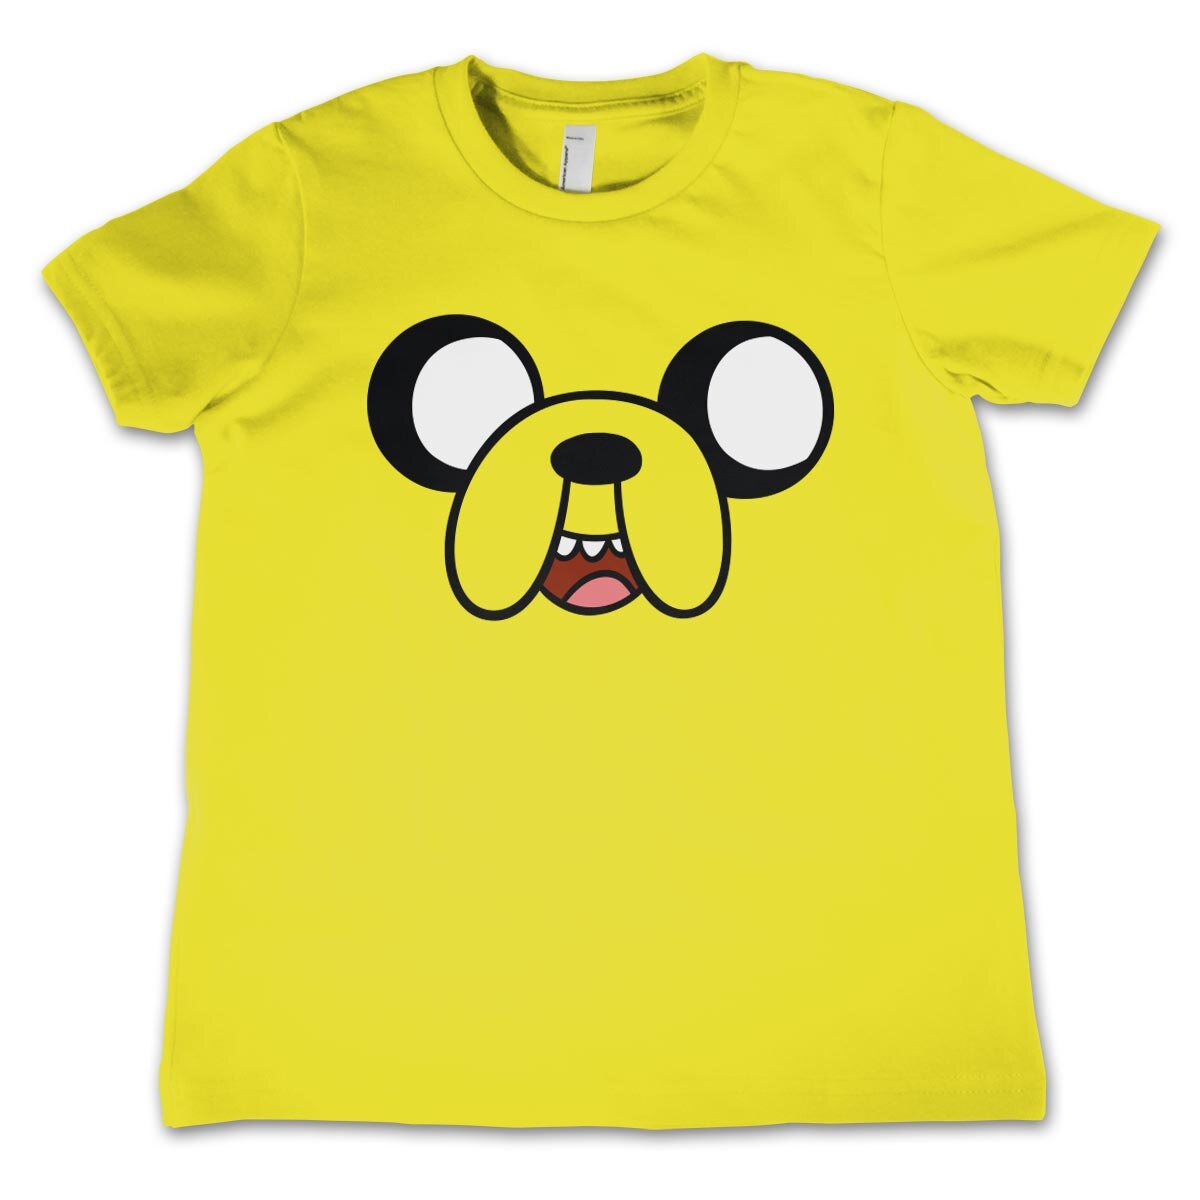 Jake The Dog Girls Kids T-Shirt